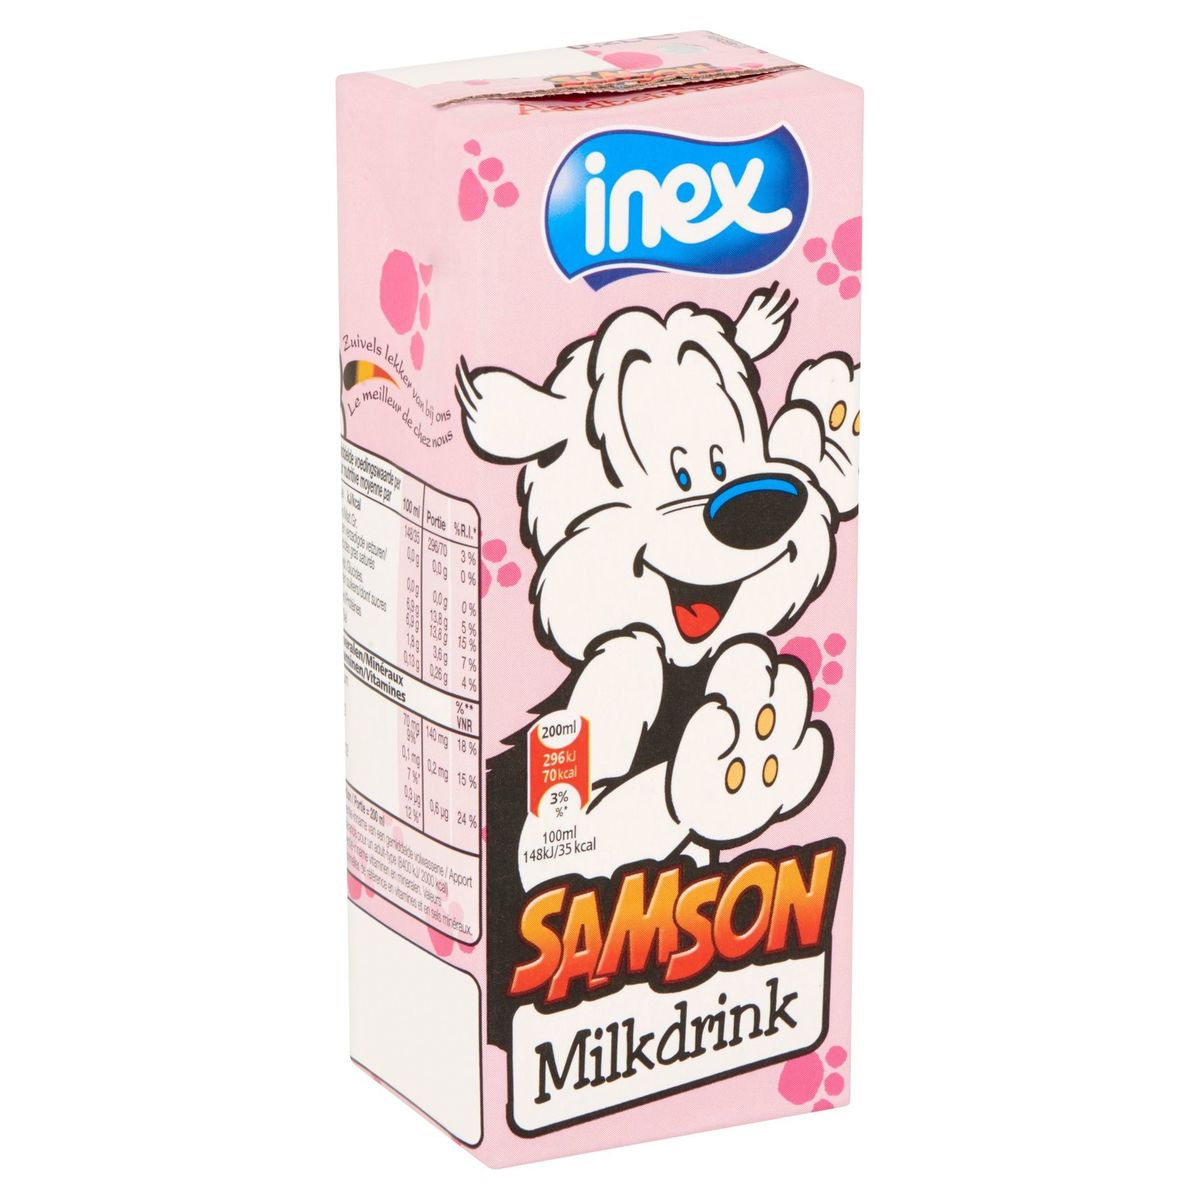 Inex Samson Milkdrink 0.2 L